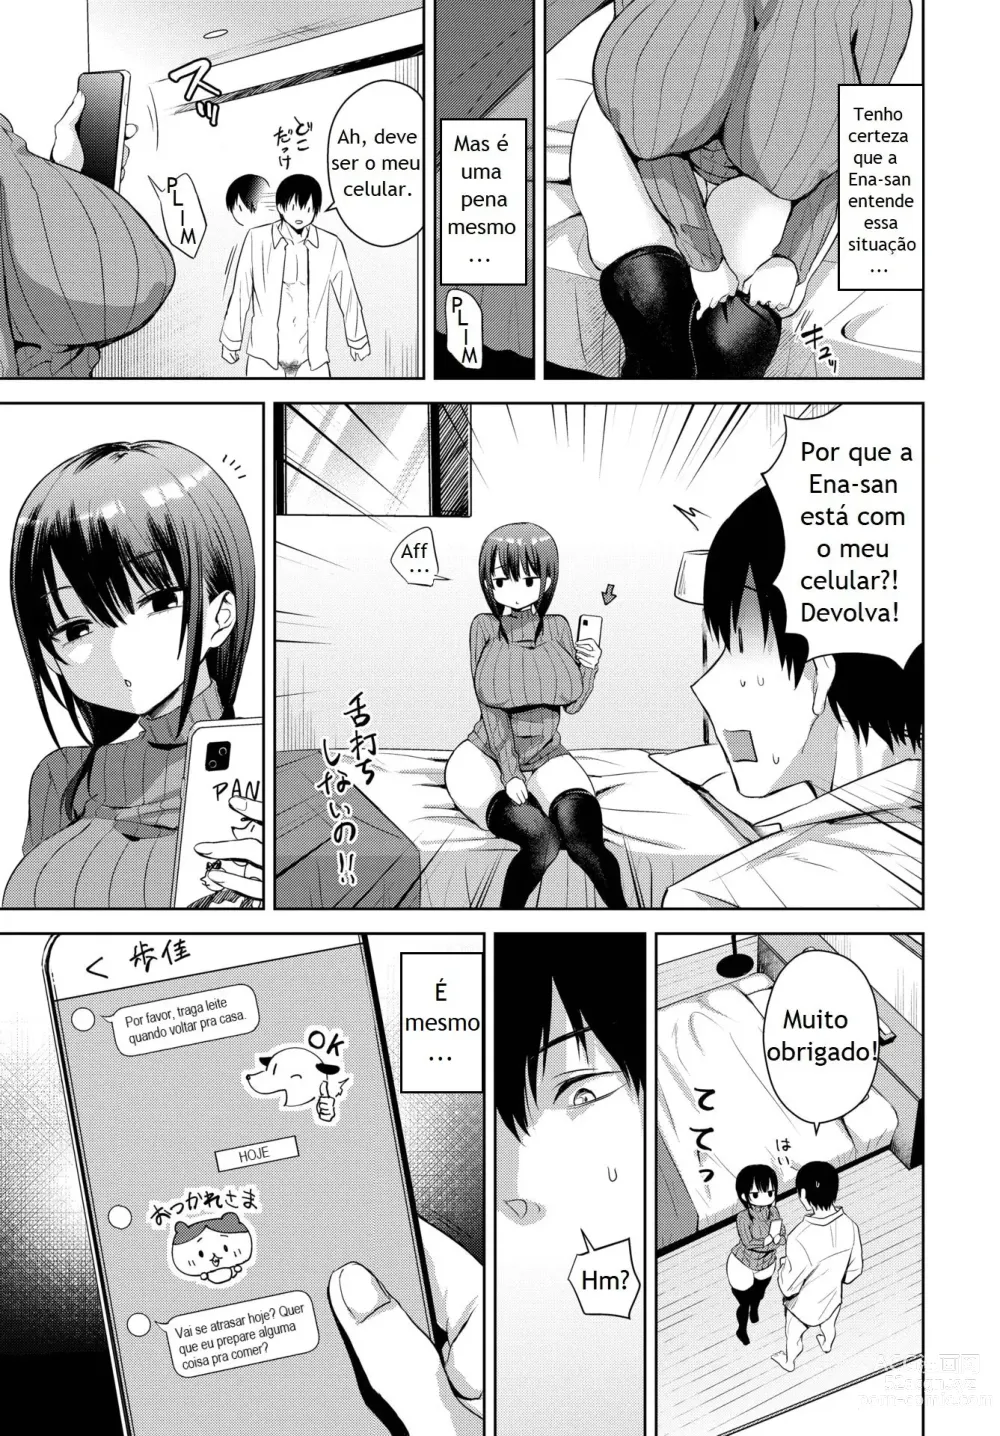 Page 9 of manga Furaretori - Its mine.